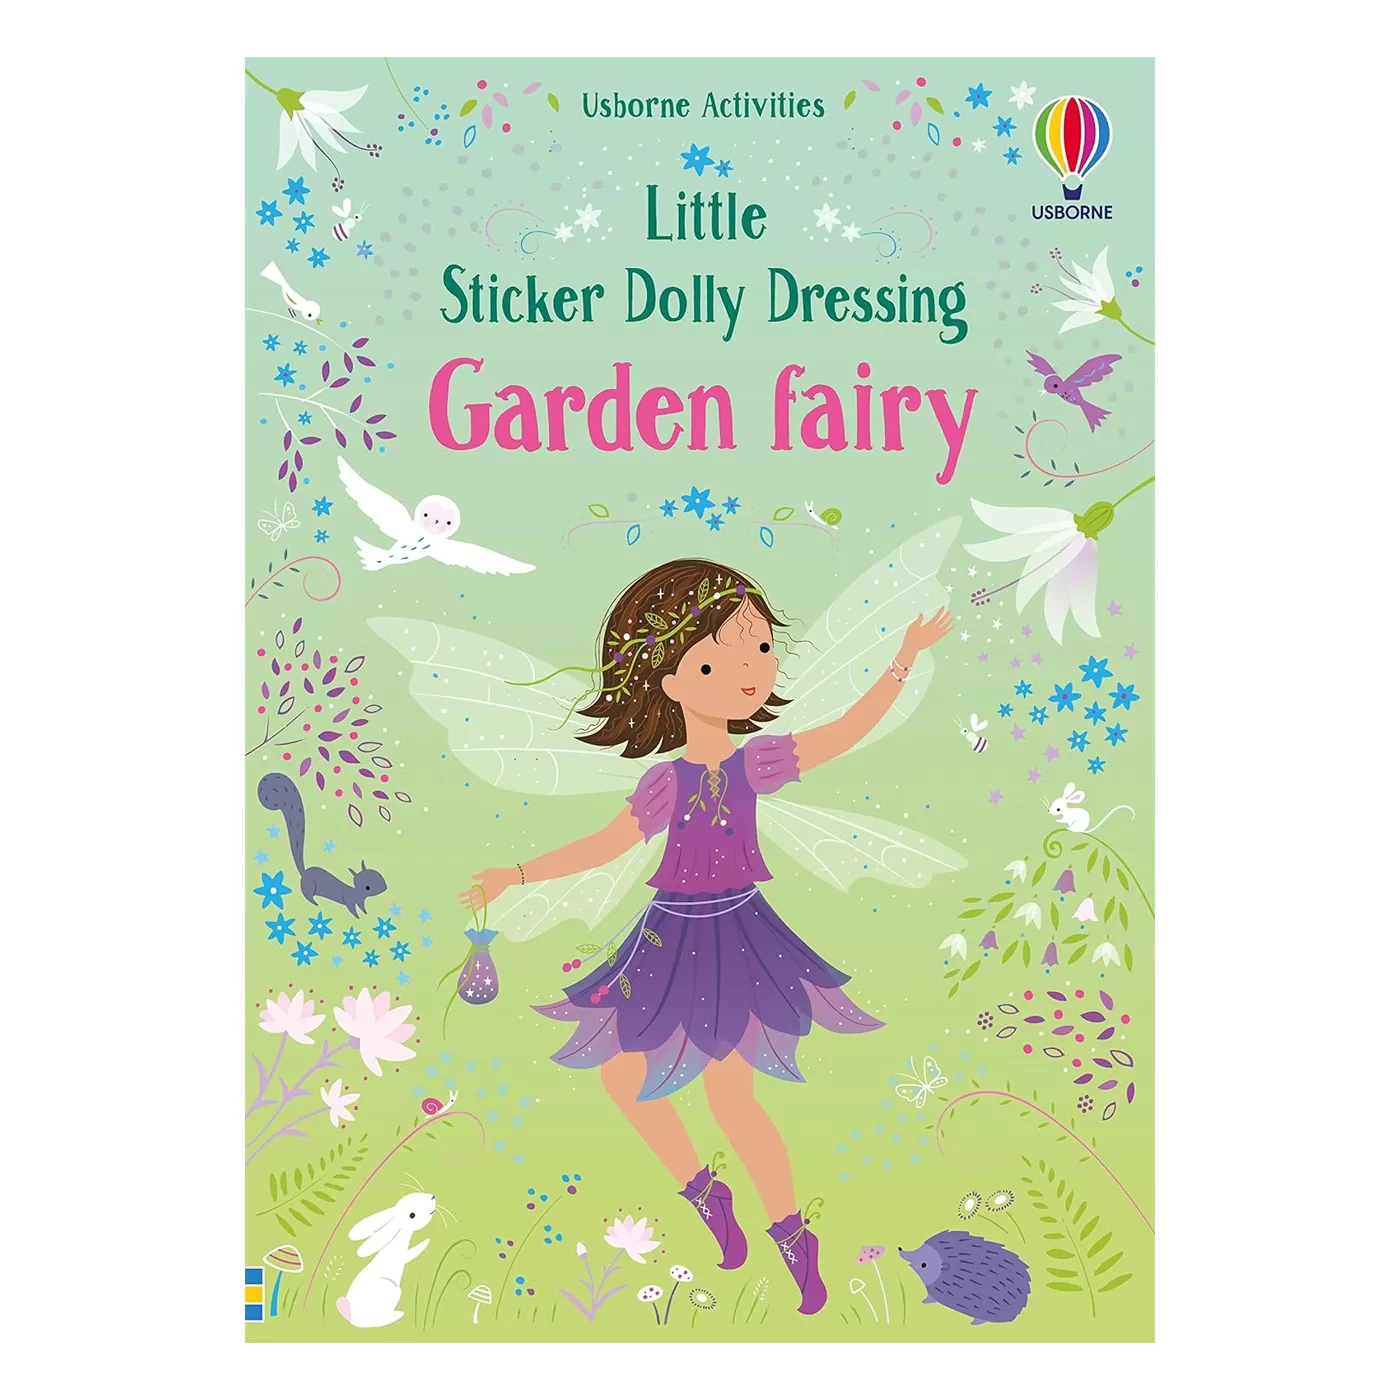  Little Sticker Dolly Dressing Garden Fairy